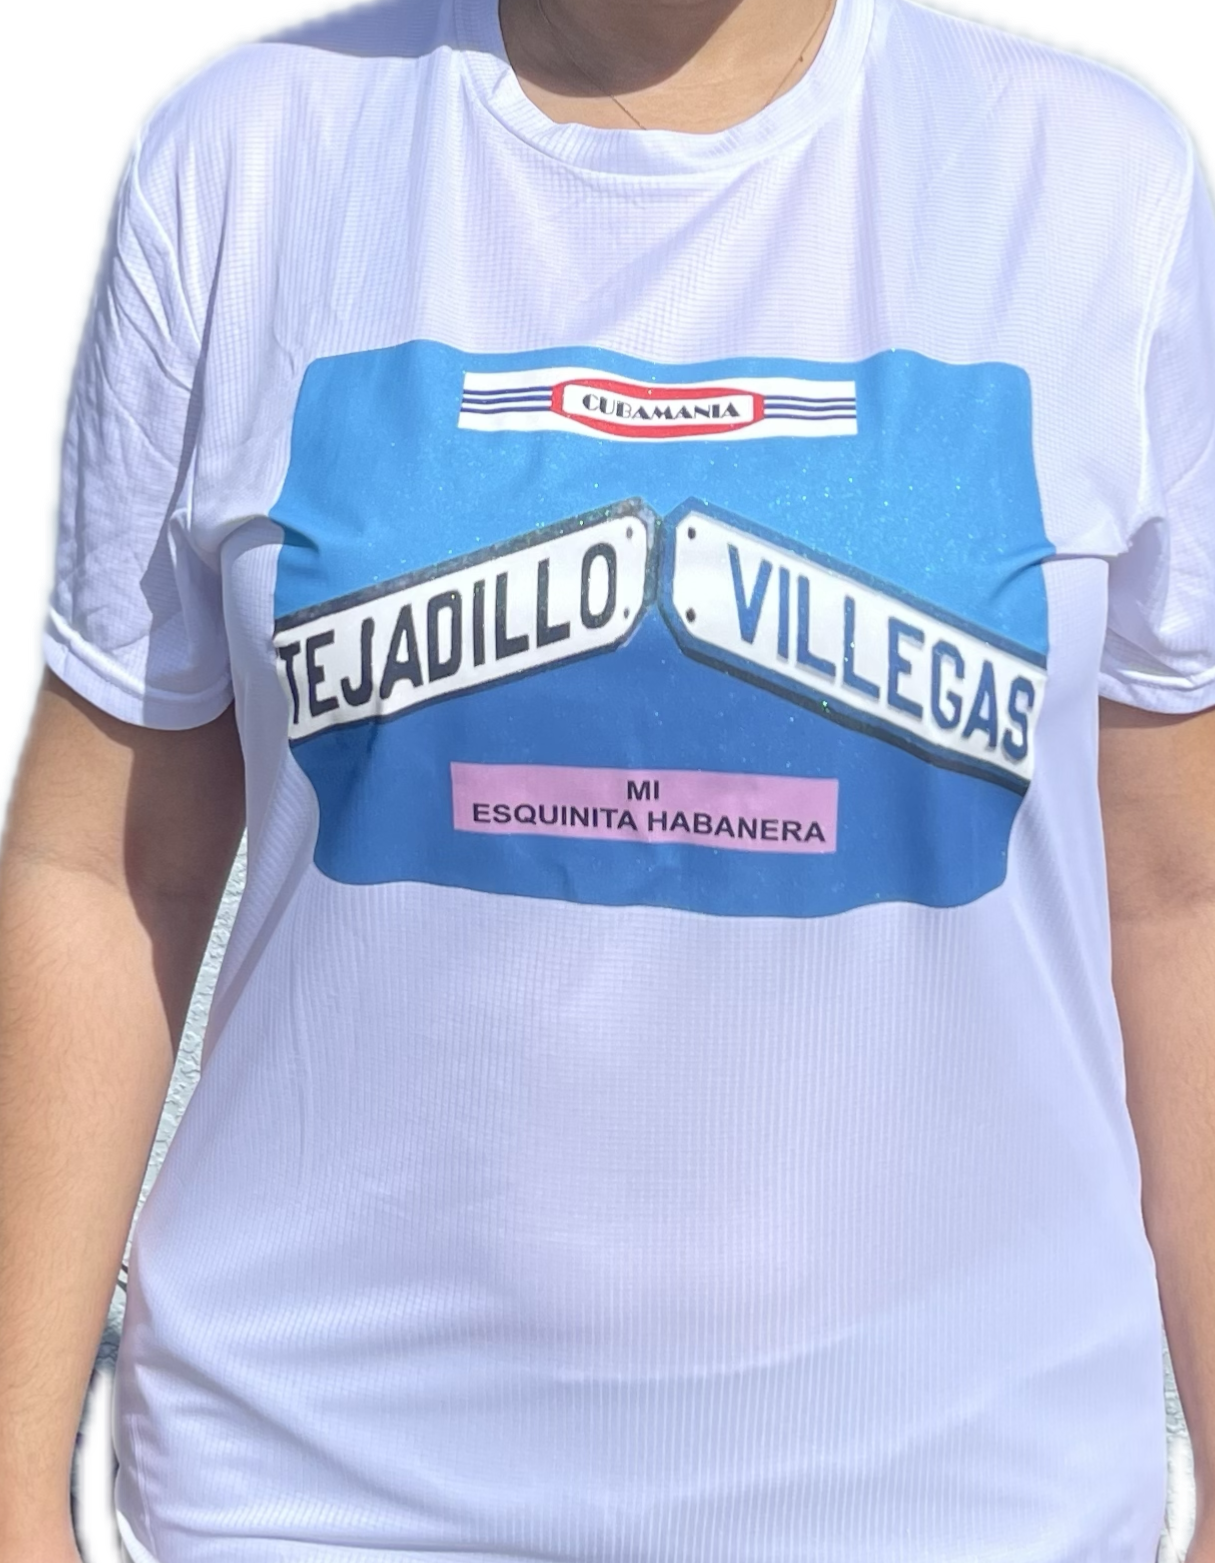 White T-shirt With Street Signs and "Mi Esquinita Habanera"